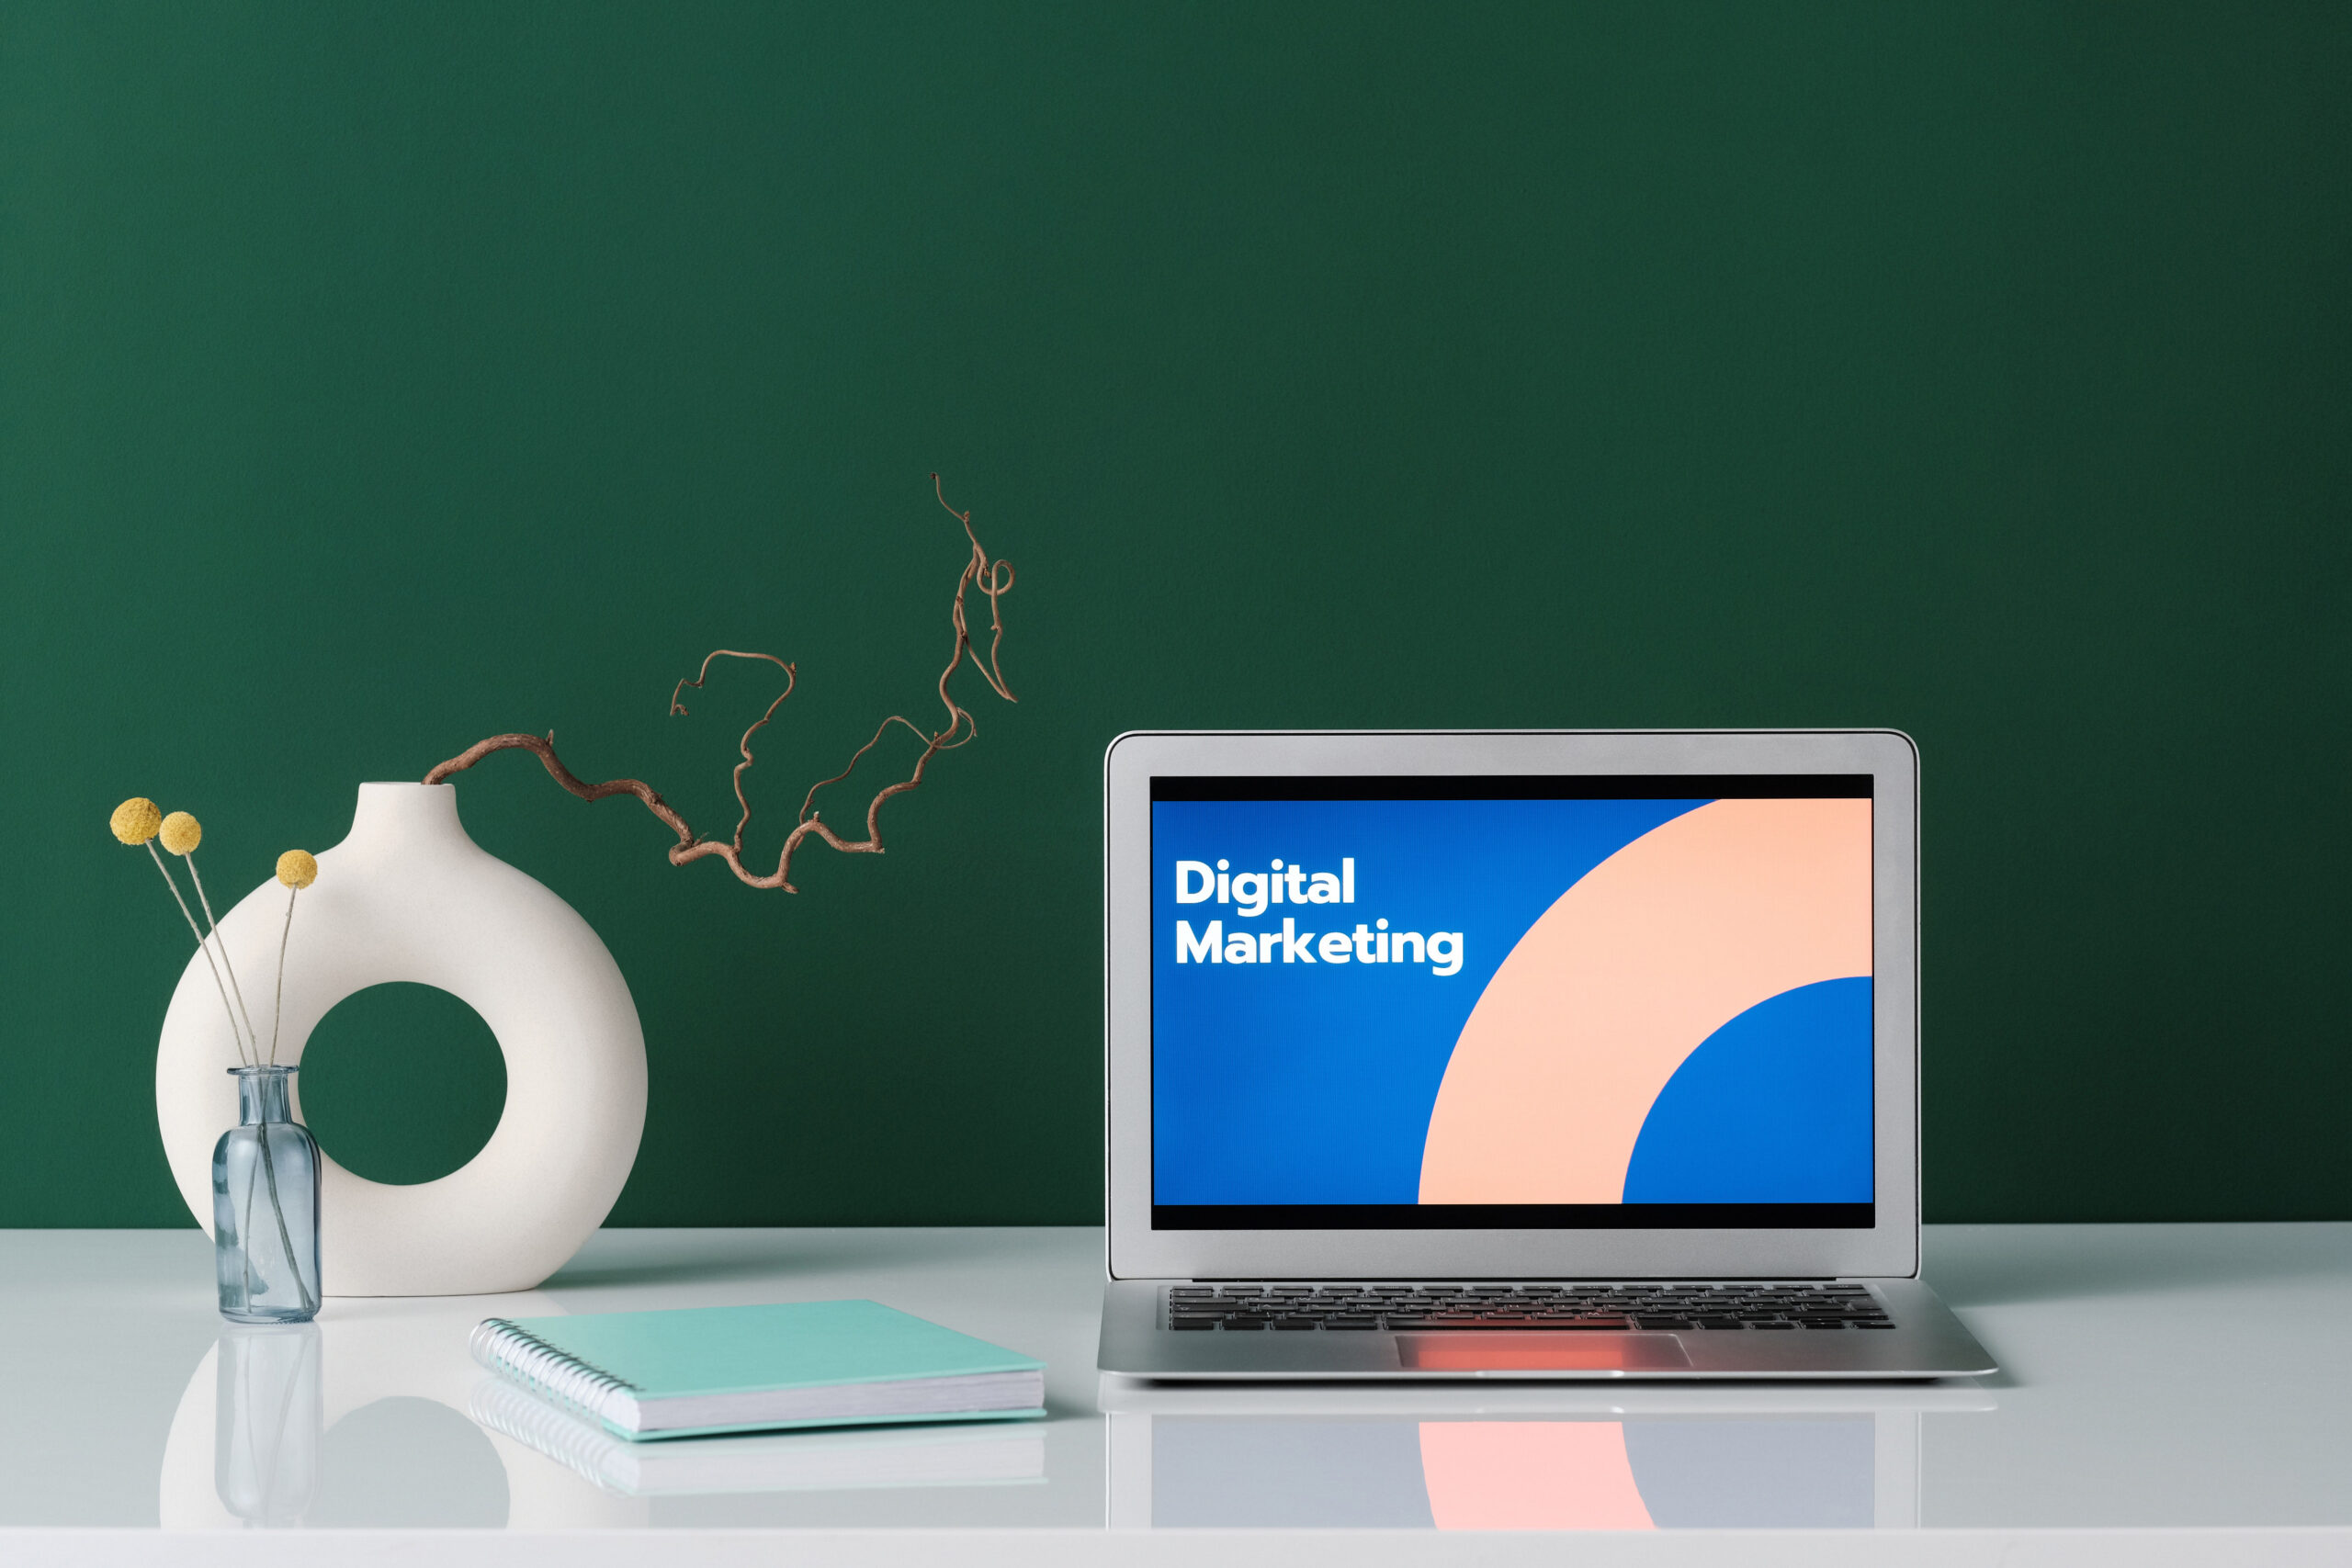 CareerLink digital marketing student success story